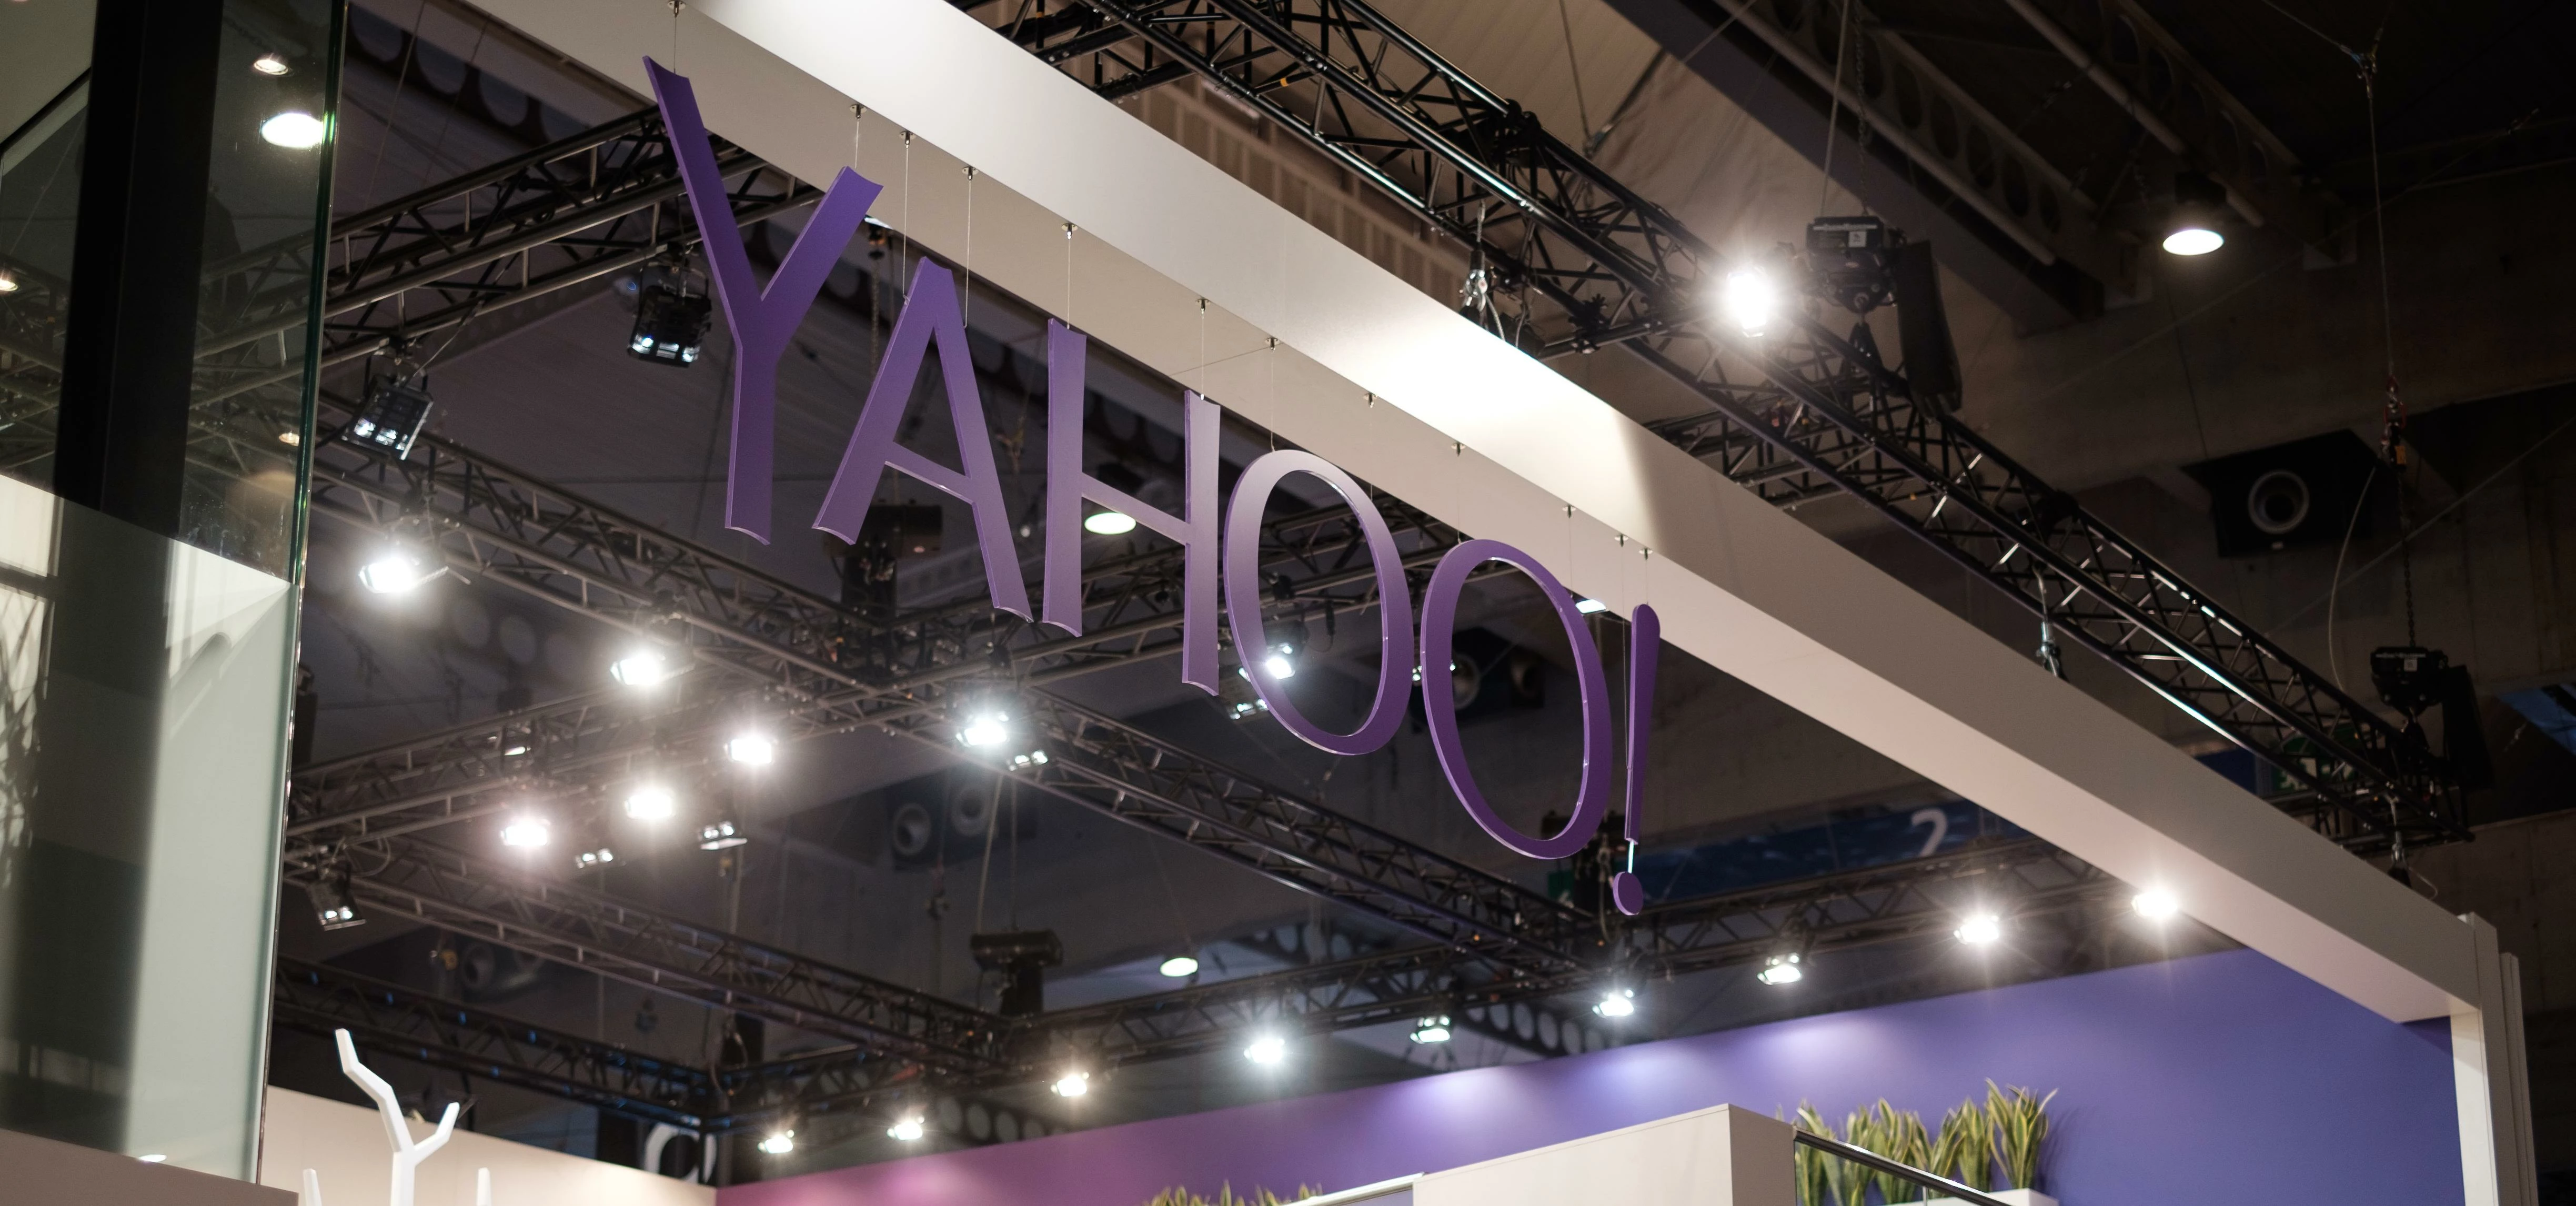 Yahoo - Mobile World Congress 2016